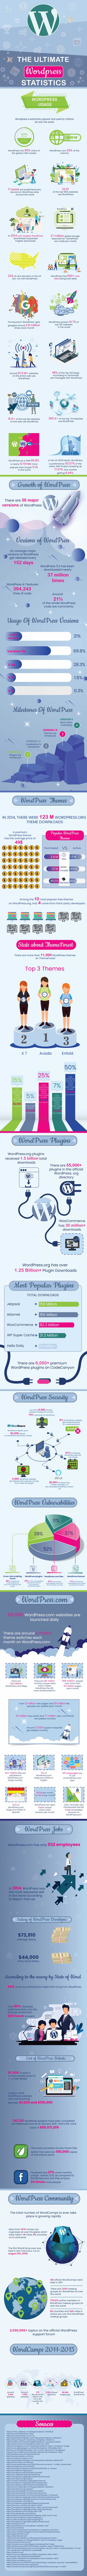 100 + WordPress Statistics (The Complete Picture)